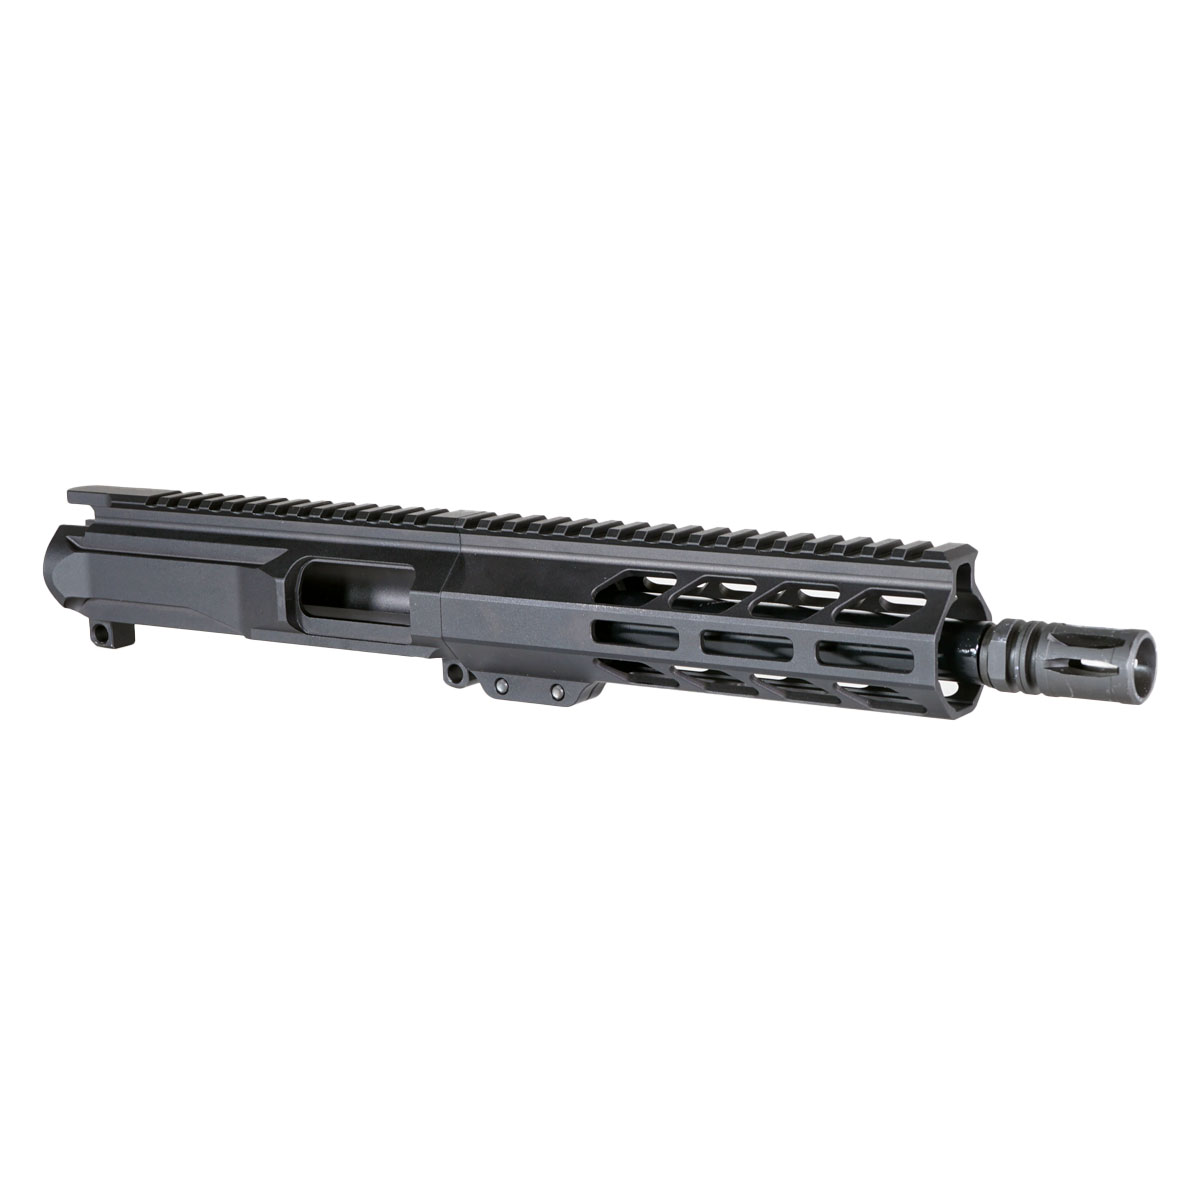 MMC 'Eternal Night Gen 2' 8.5-inch AR-15 9mm Nitride Pistol Upper Build Kit